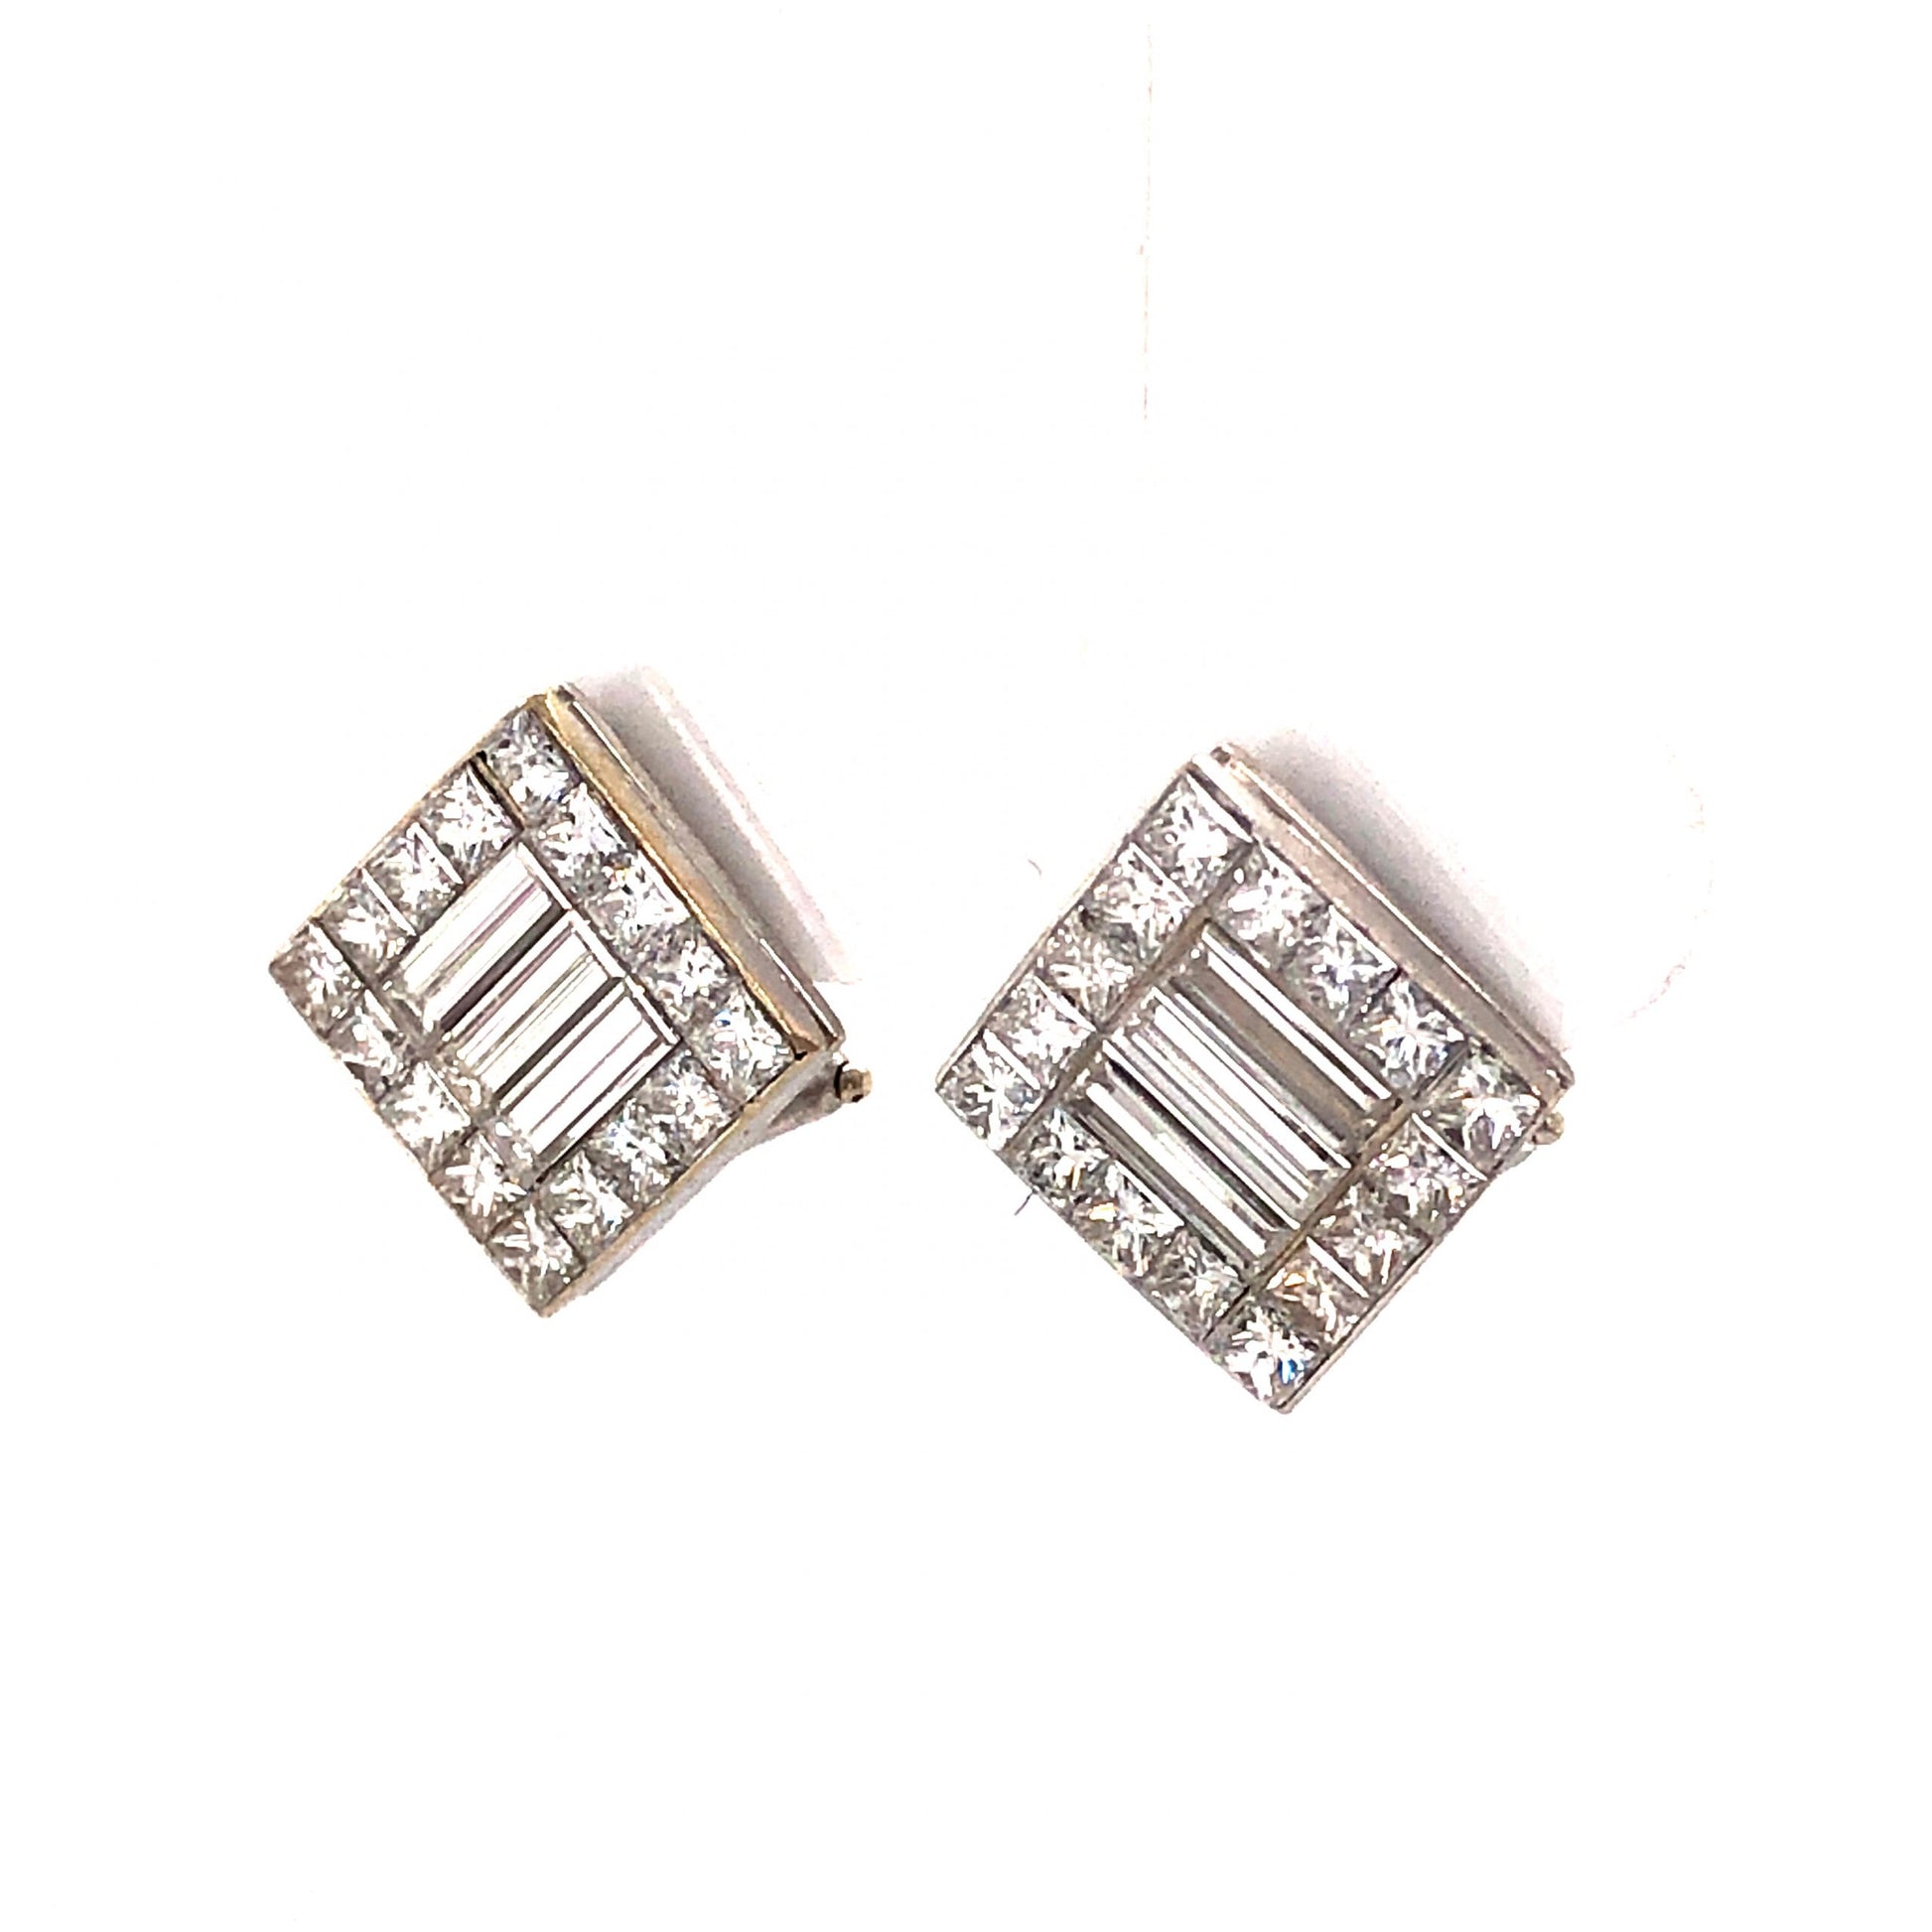 Square Diamond Earring Studs in 18k White GoldComposition: 18 Karat White GoldTotal Diamond Weight: 2.85 ctTotal Gram Weight: 5.9 gInscription: 89035 QUAD 18k 750